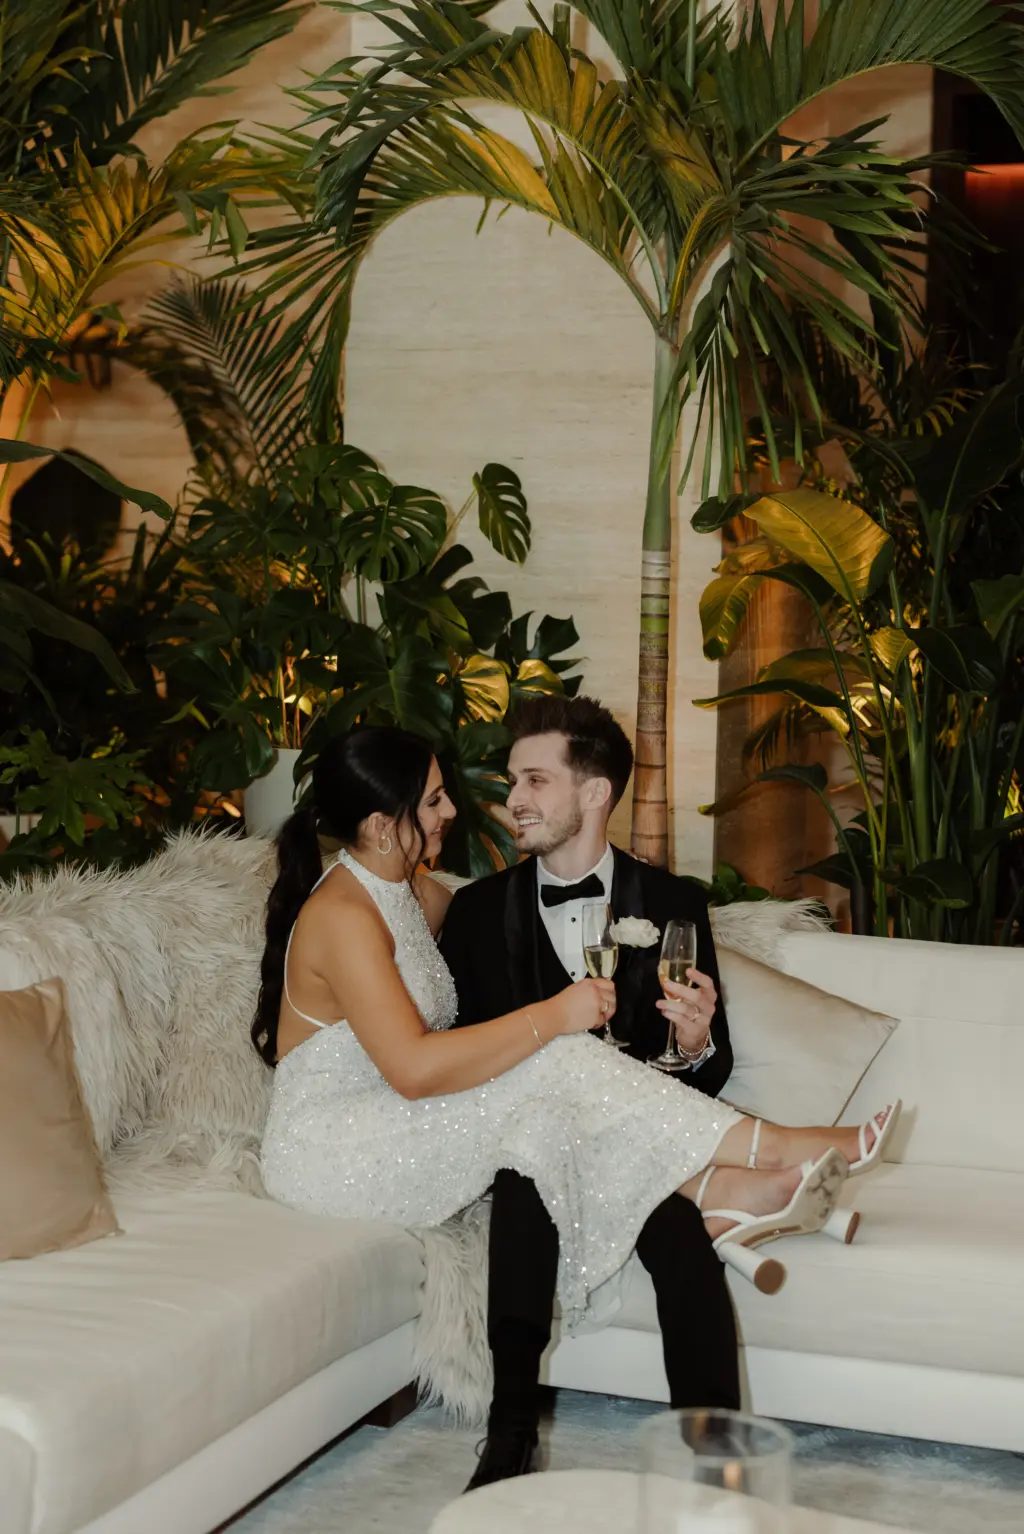 Bride and Groom Enjoying Wedding Reception | Retrofete Reception Dress Inspiration | Tampa Bay Event Venue The Edition Hotel